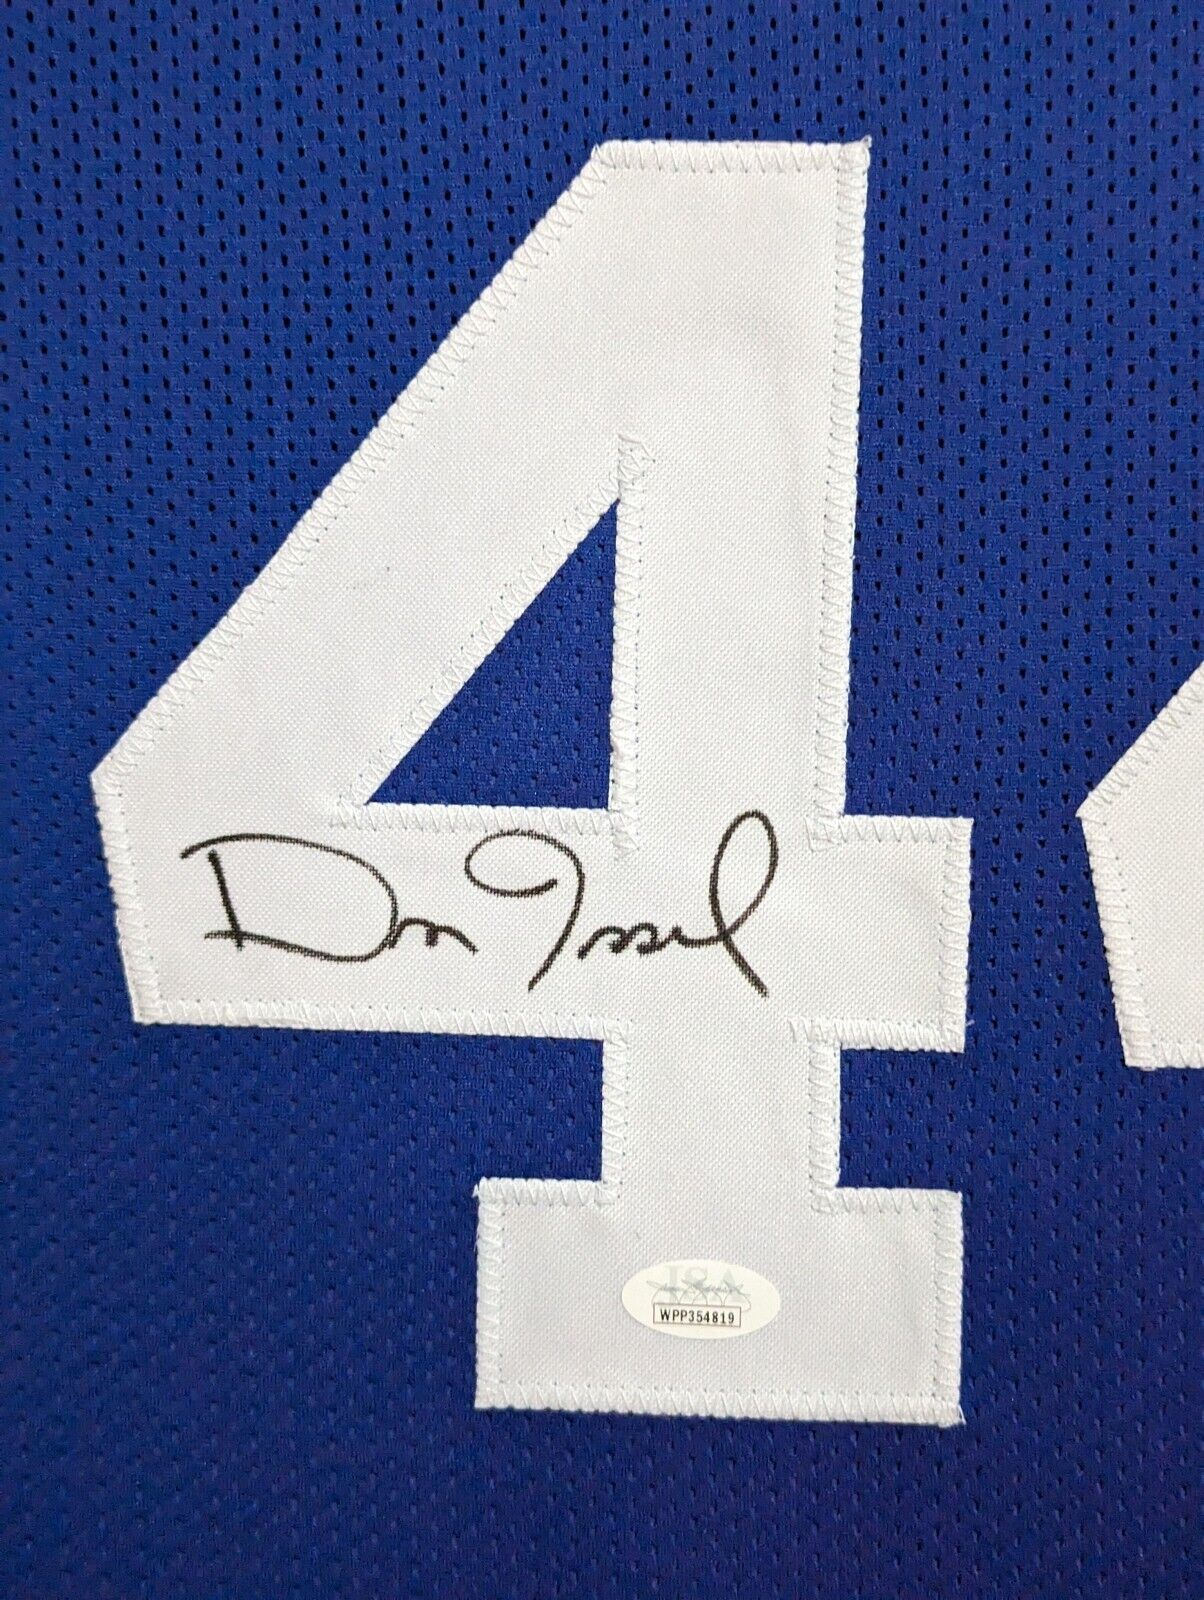 MVP Authentics Framed Kentucky Wildcats Dan Issel Autographed Signed Jersey Jsa Coa 450 sports jersey framing , jersey framing